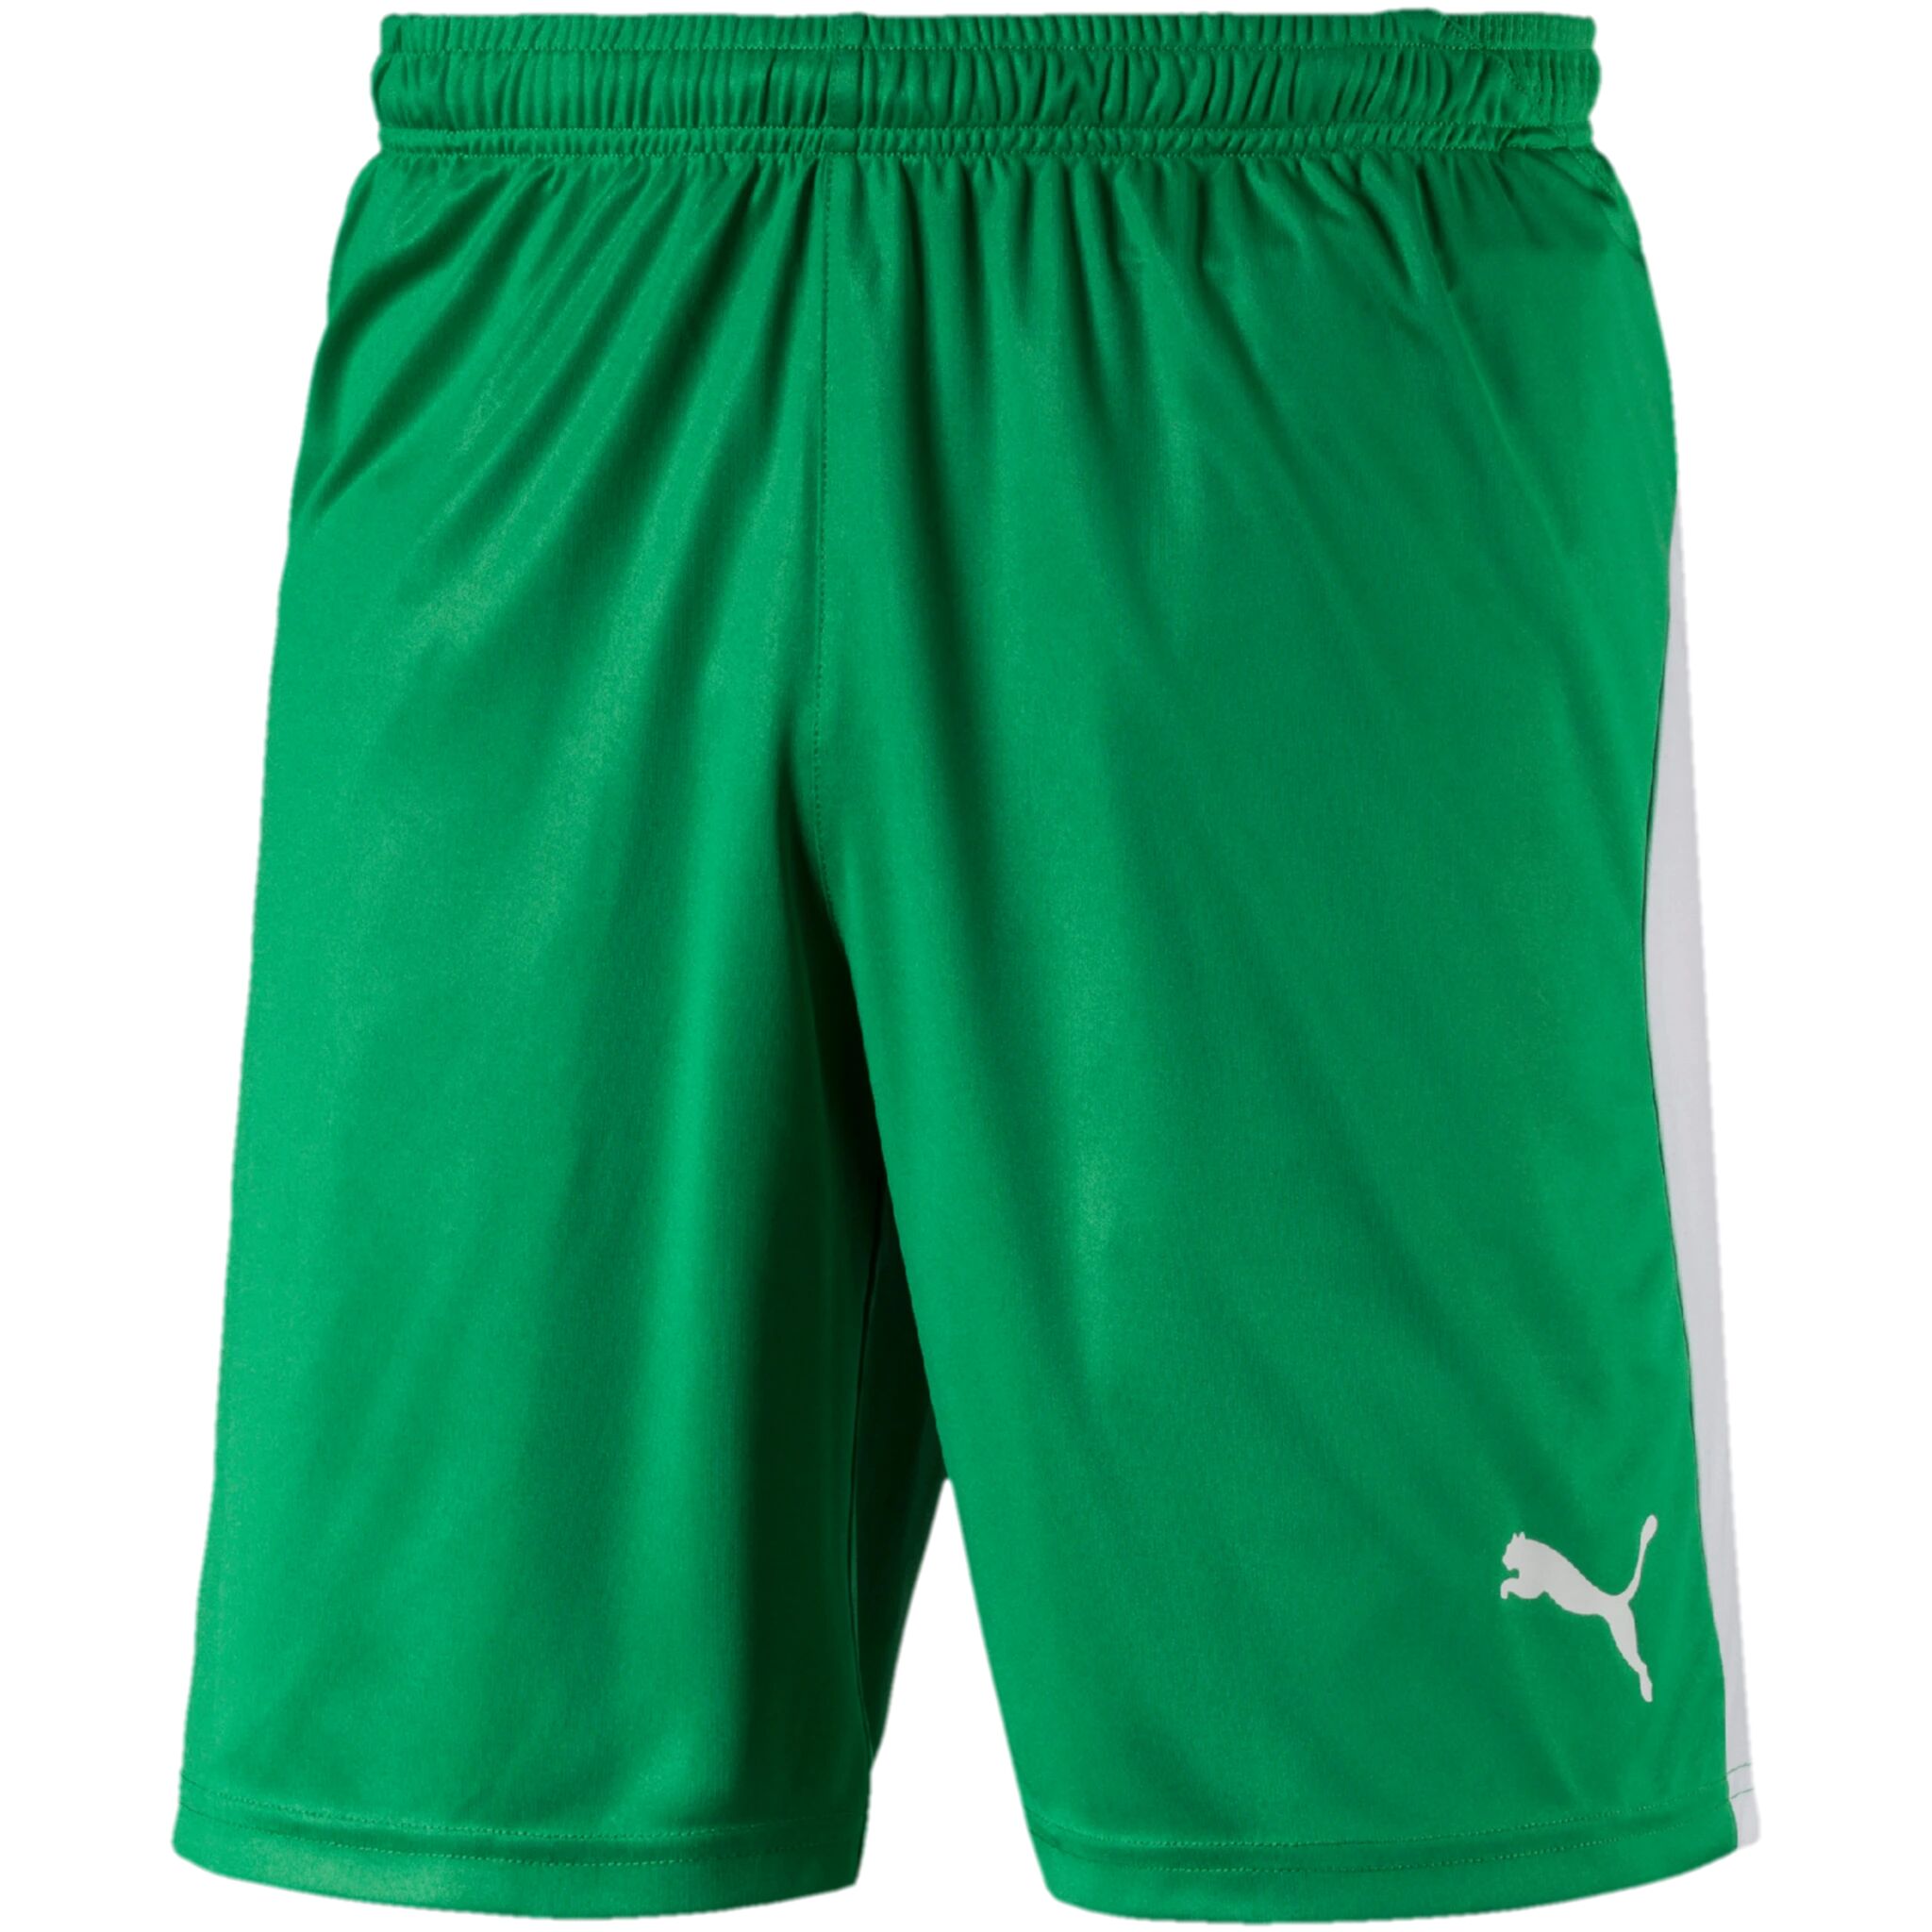 Puma LIGA Shorts with Brief, fotballshorts senior S Bright Green-puma Wh